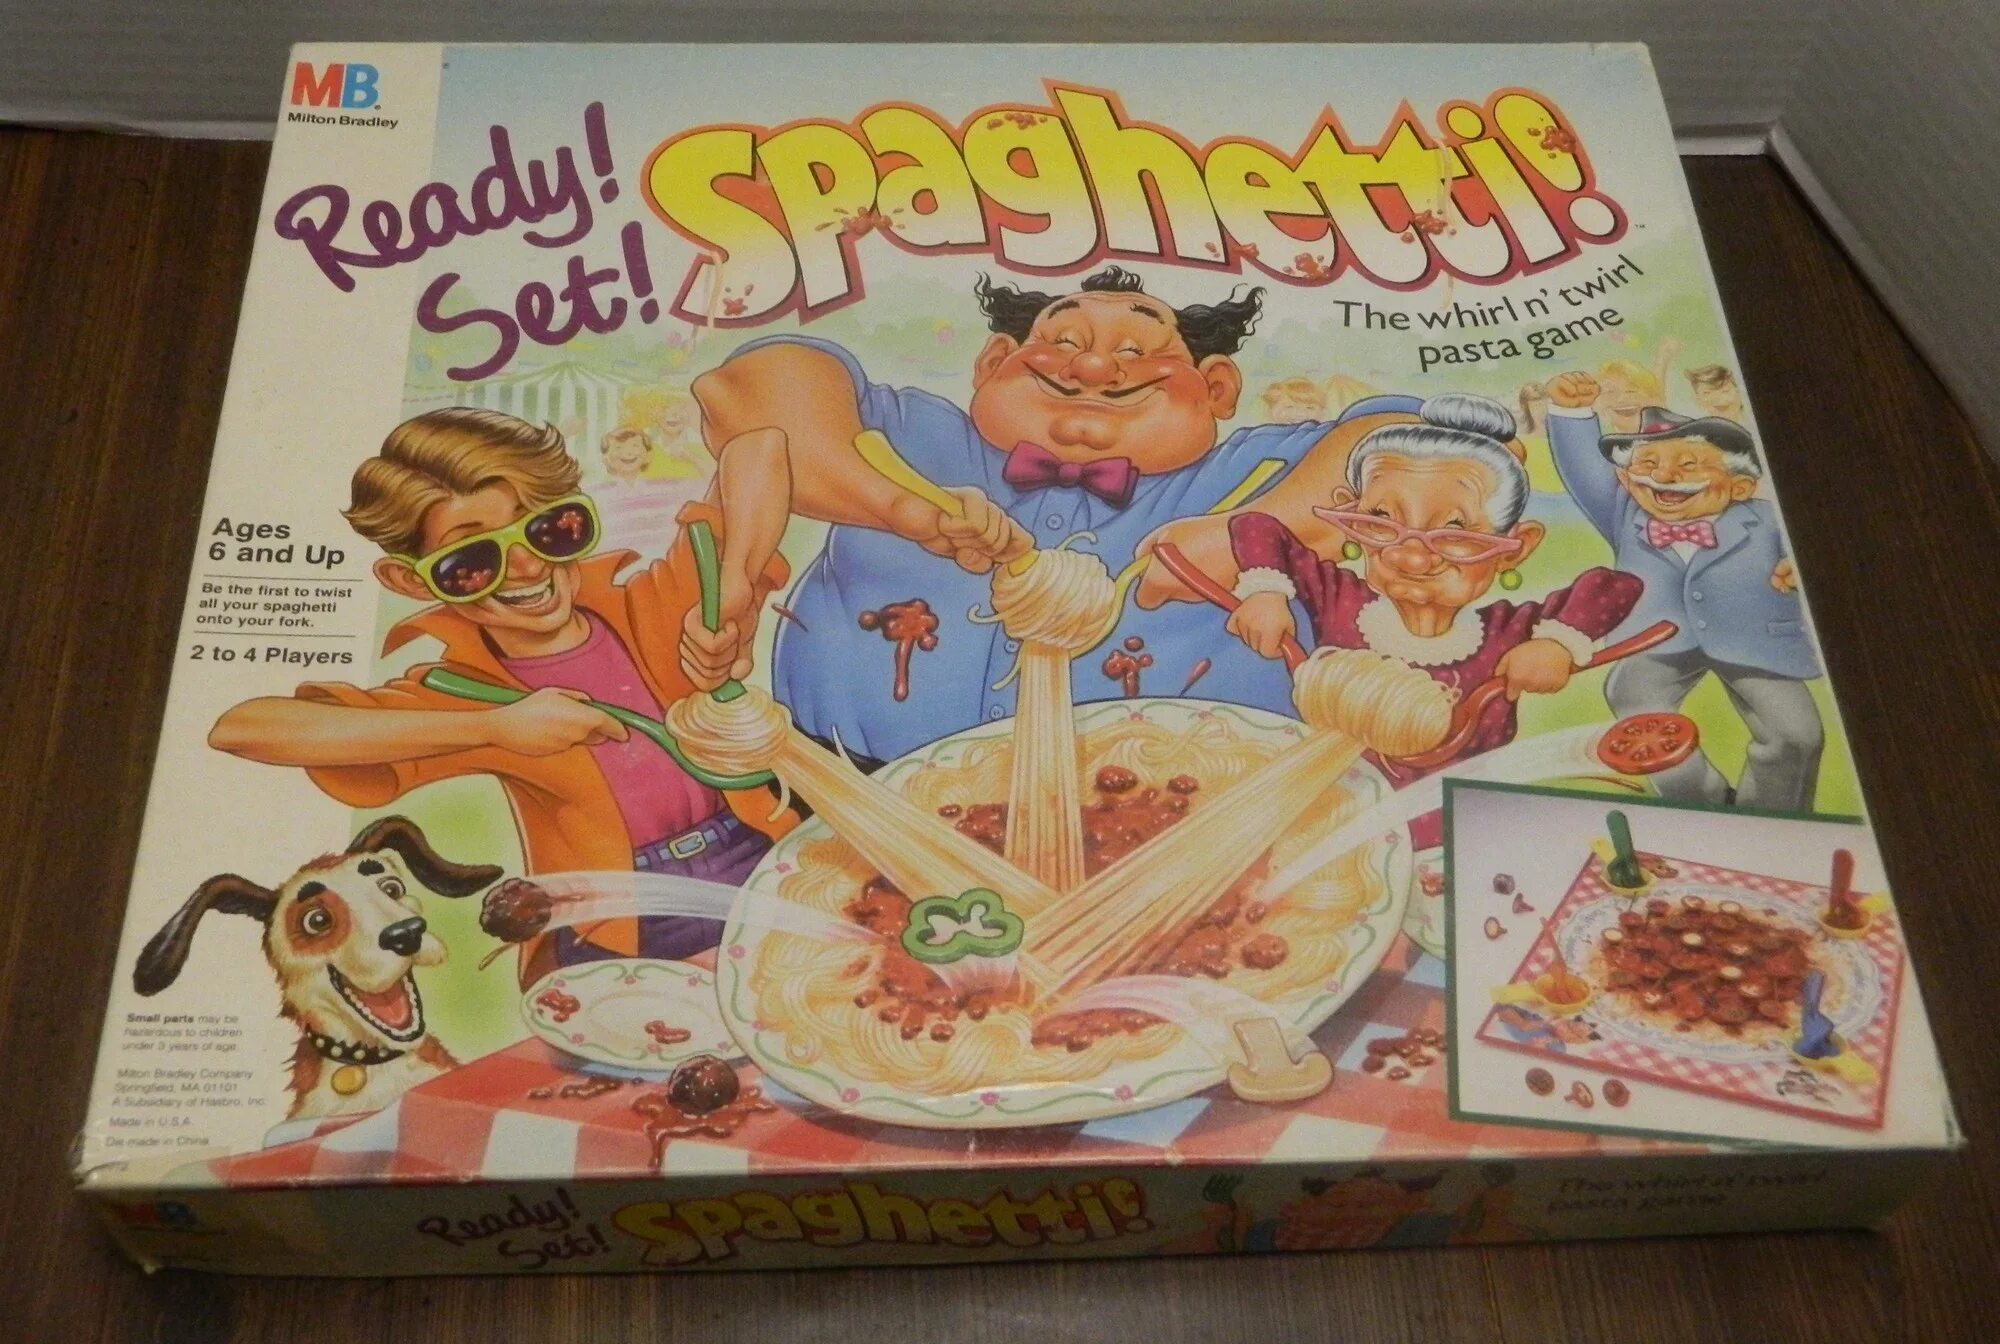 Игра ready Spaghetti. Ready Spaghetti настольная игра. Настольная игра шустрые спагетти. Настольная игра "спагетти". Игра спагетти играть